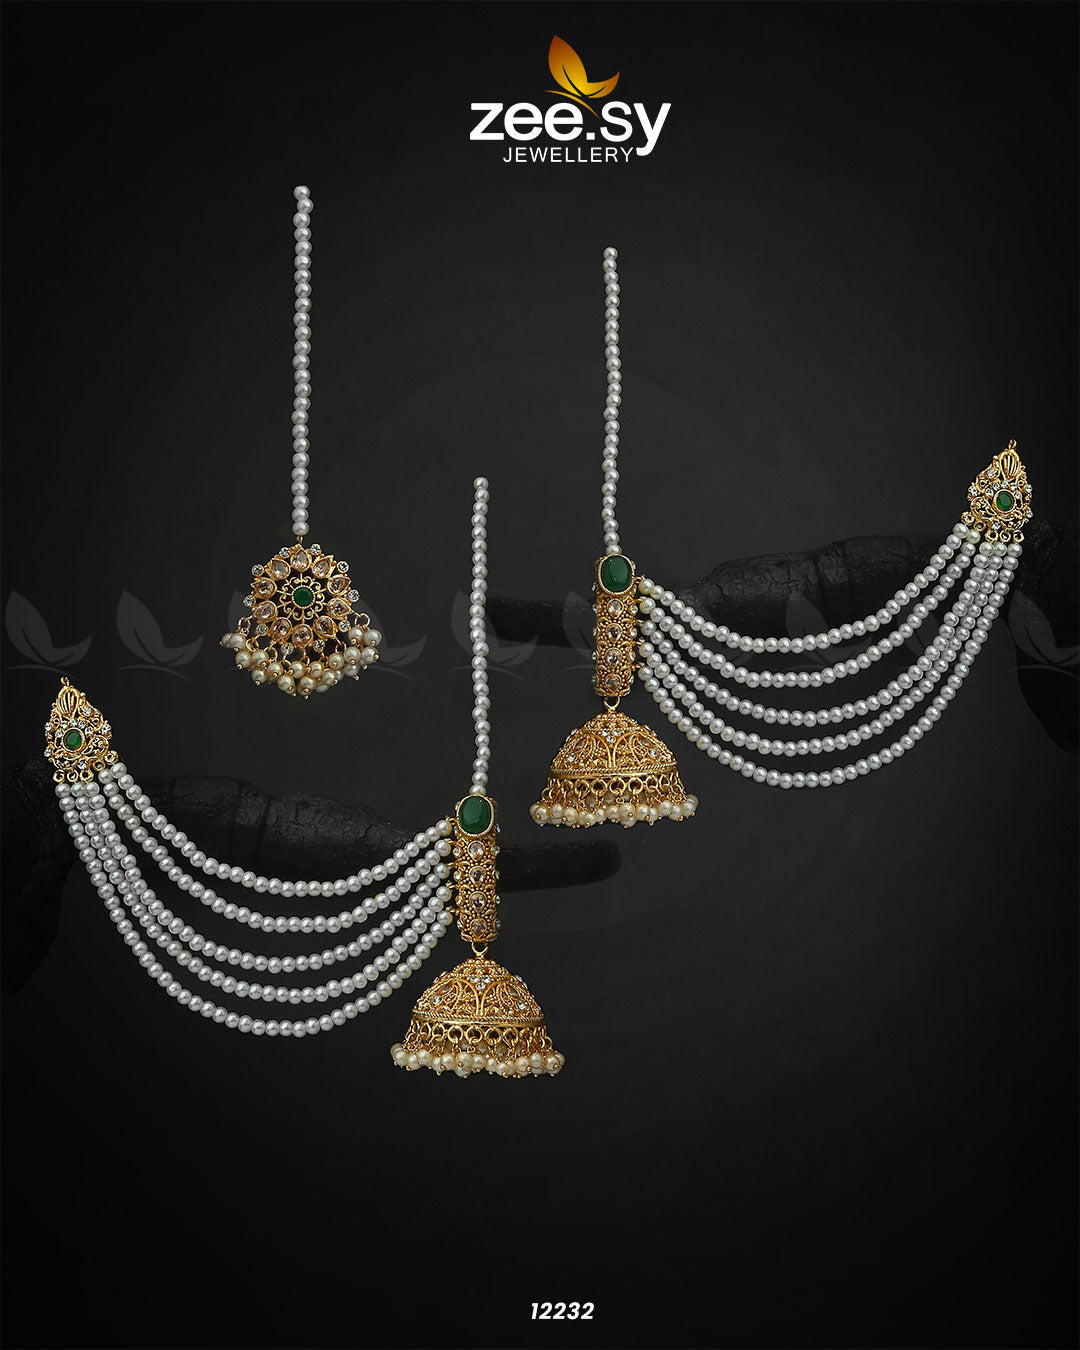 Baahubali 2: A Sneak Peek Into The Jewellery Designed For The Film - News18